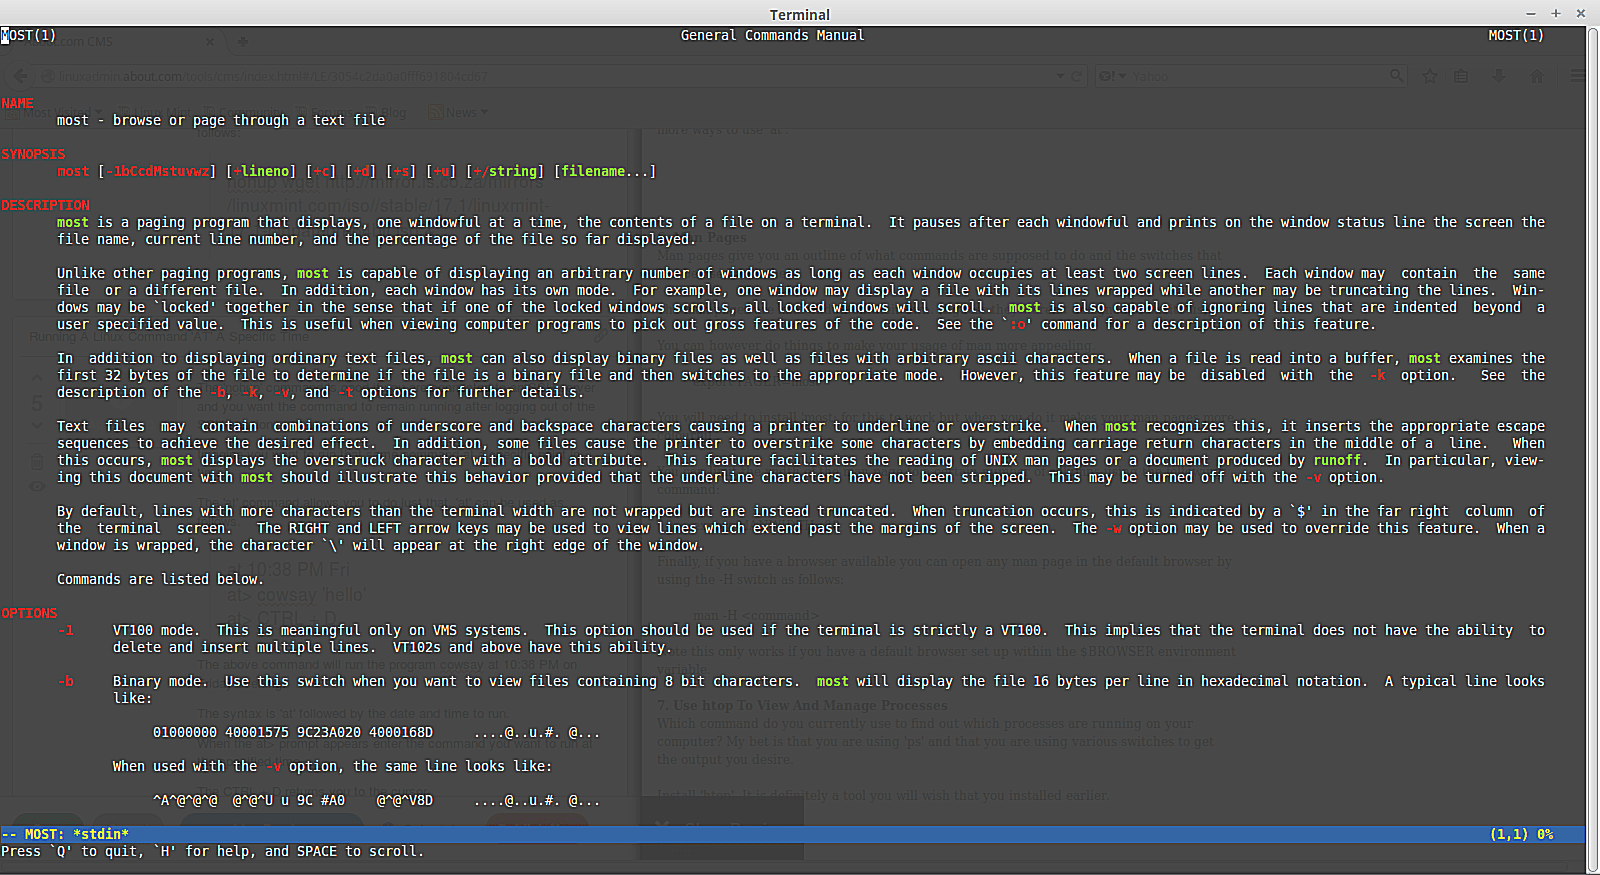 Kleurrijke man-pagina's in de Linux-terminal